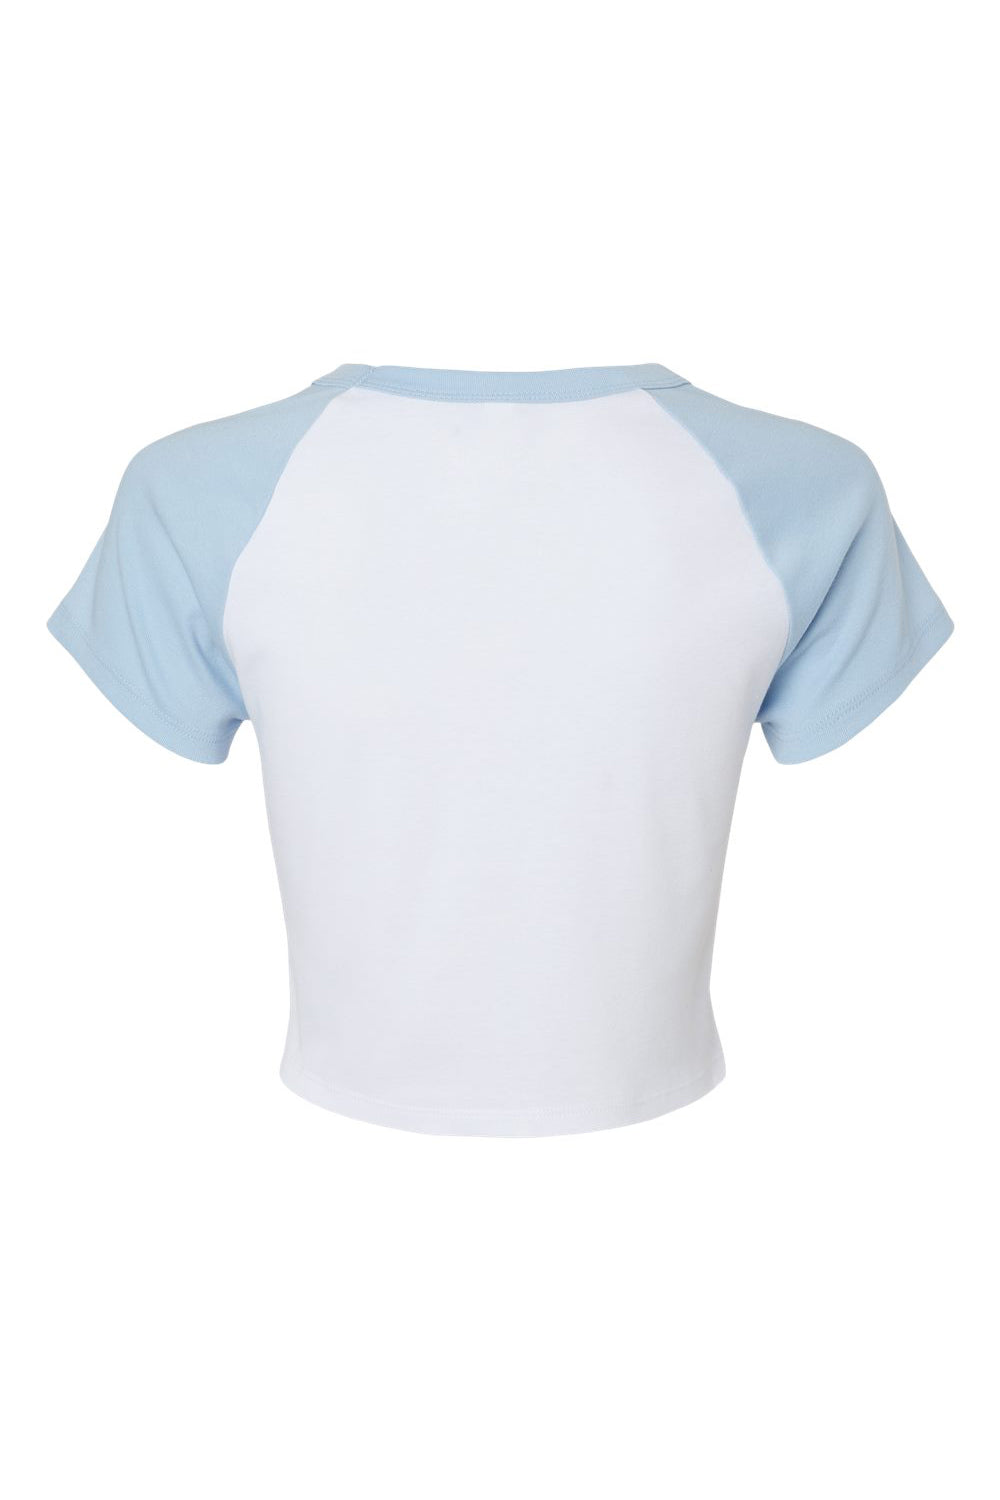 Bella + Canvas 1201 Womens Micro Ribbed Raglan Short Sleeve Crewneck Baby T-Shirt White/Baby Blue Flat Back